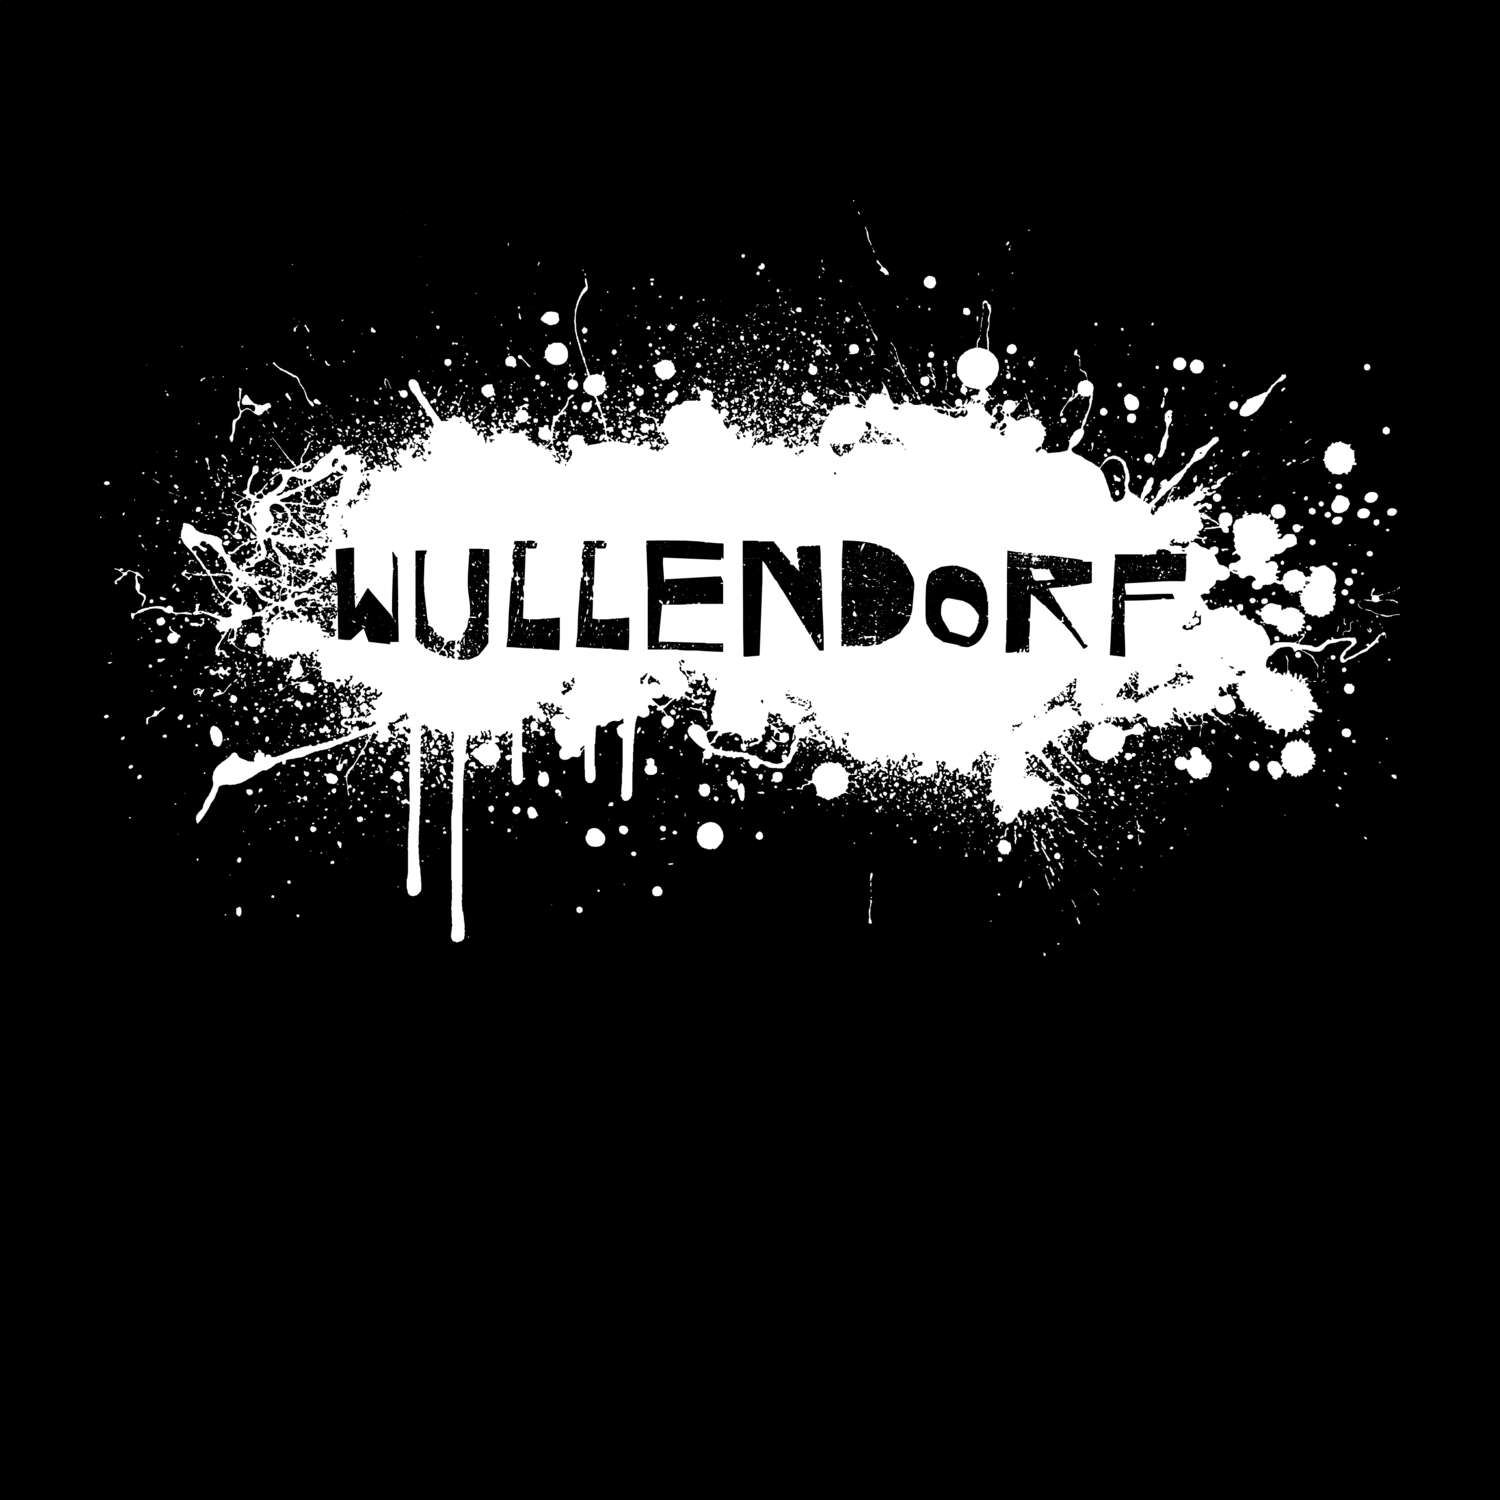 Wullendorf T-Shirt »Paint Splash Punk«